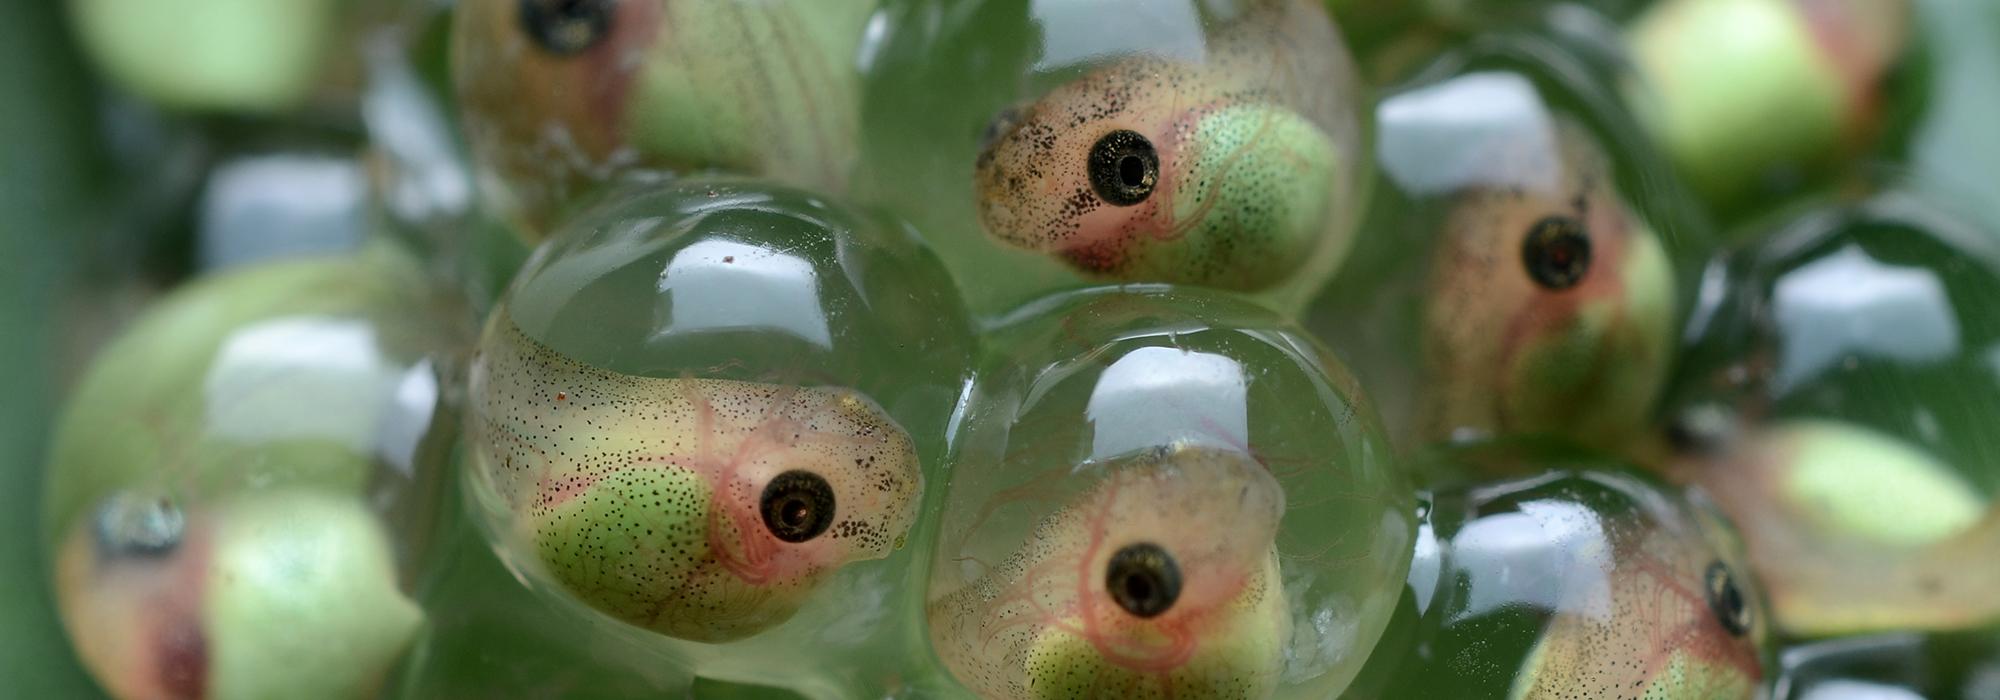 Treefrog tadpoles by Geoff Gallice (www.flickr.com/dejeuxx) used under CC-BY 2.0 license